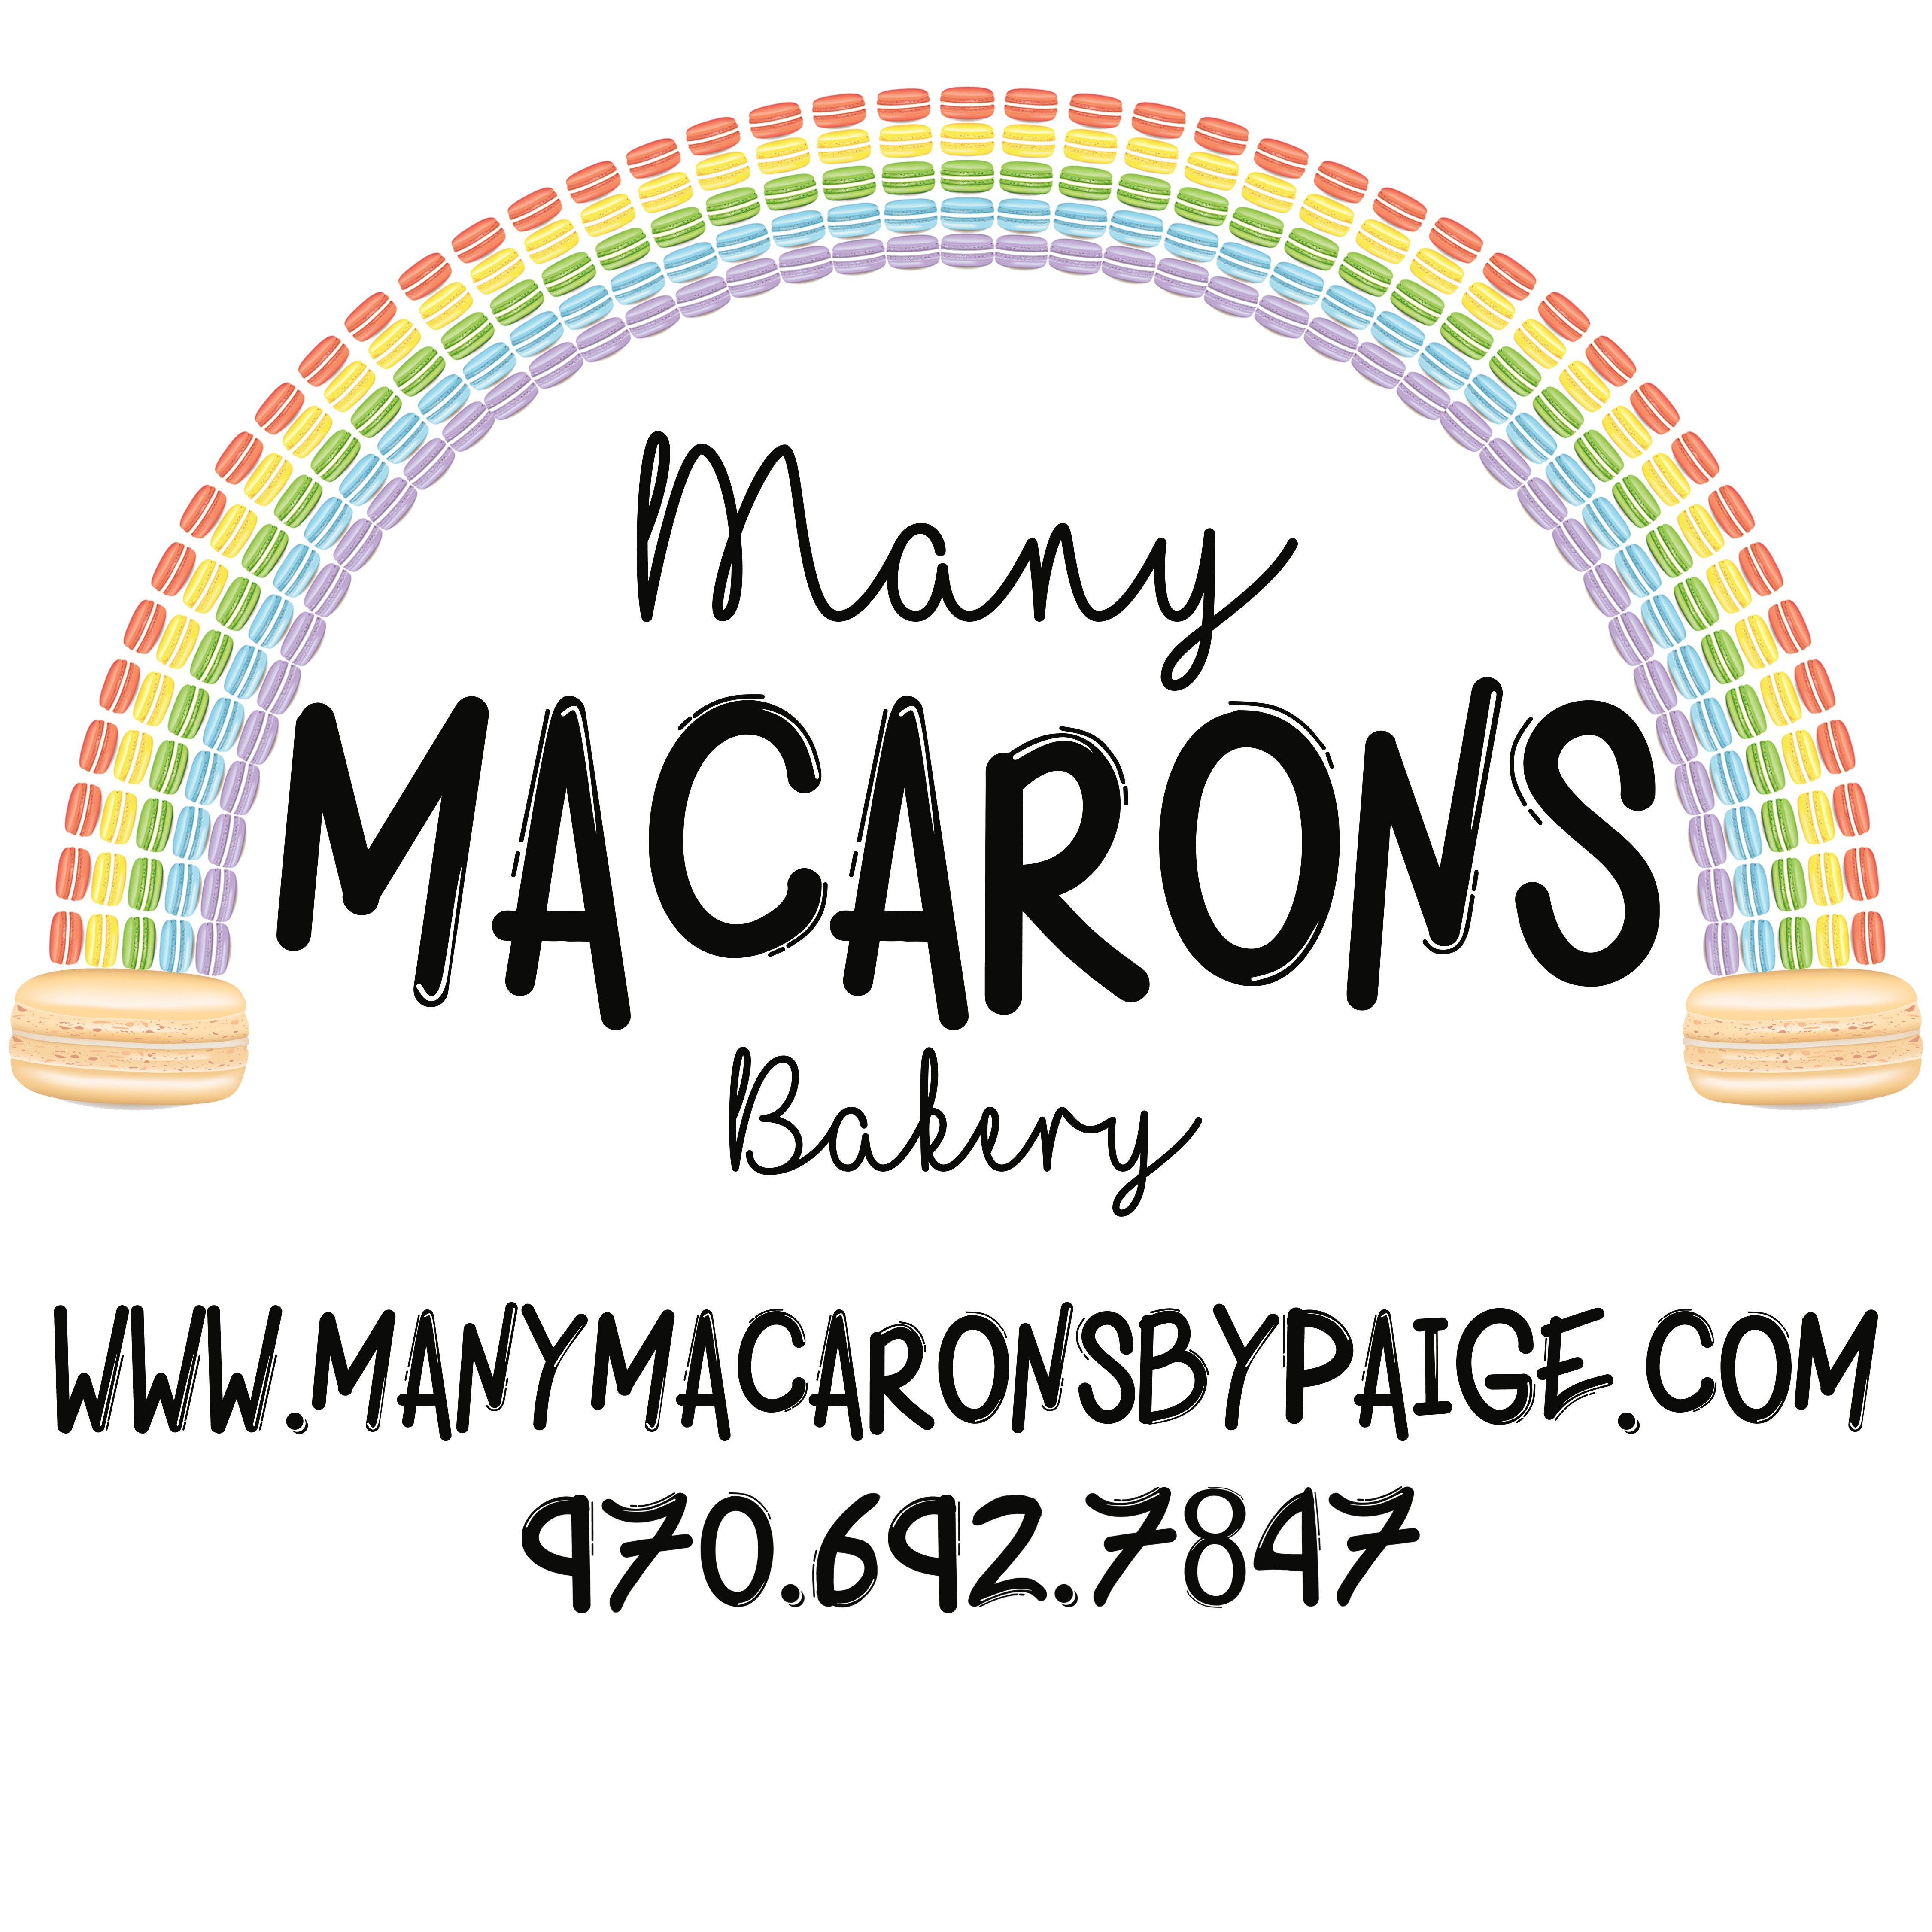 Many Macarons llc